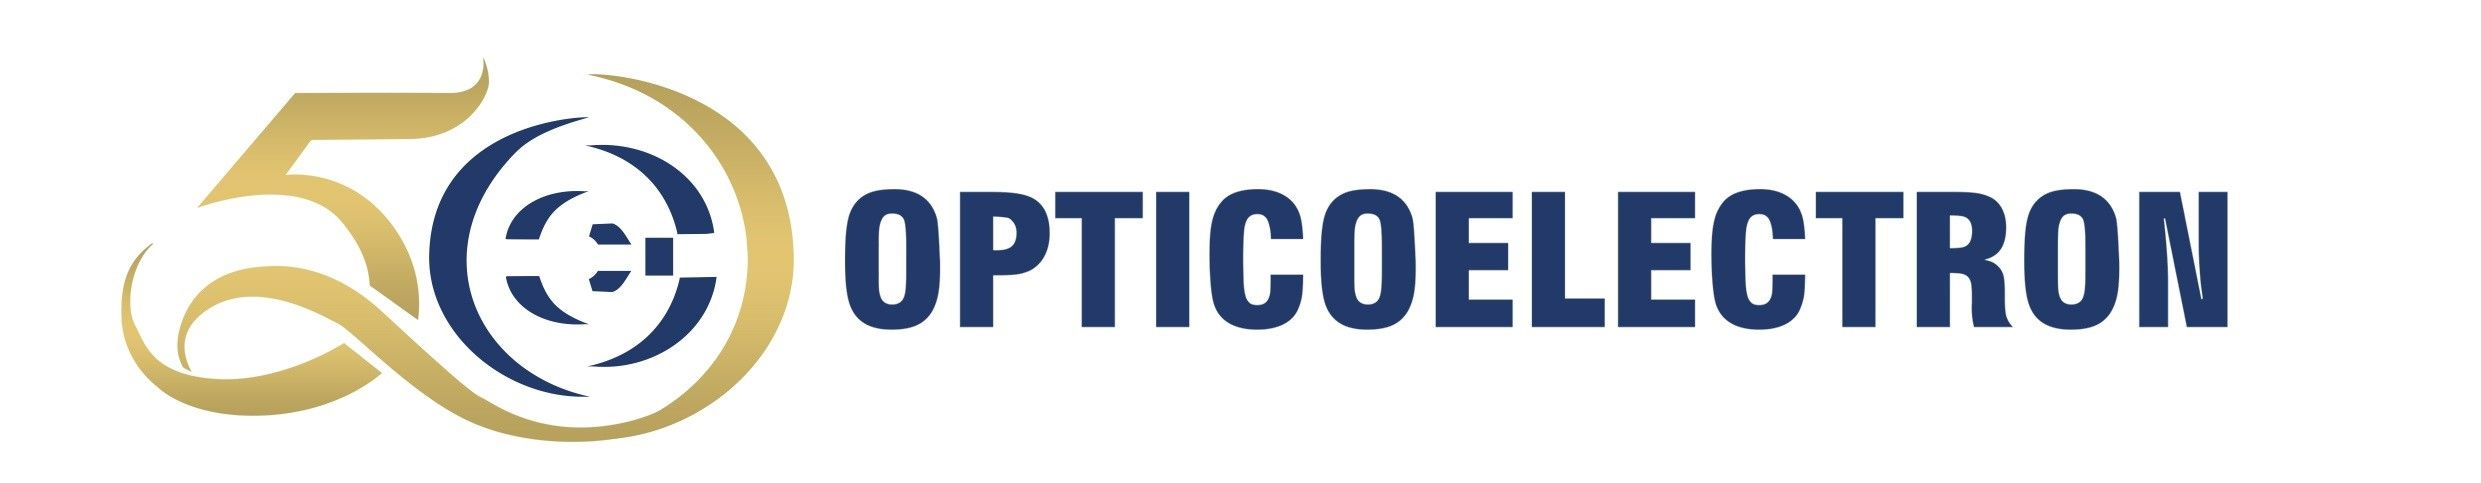 Opticoelectron Group